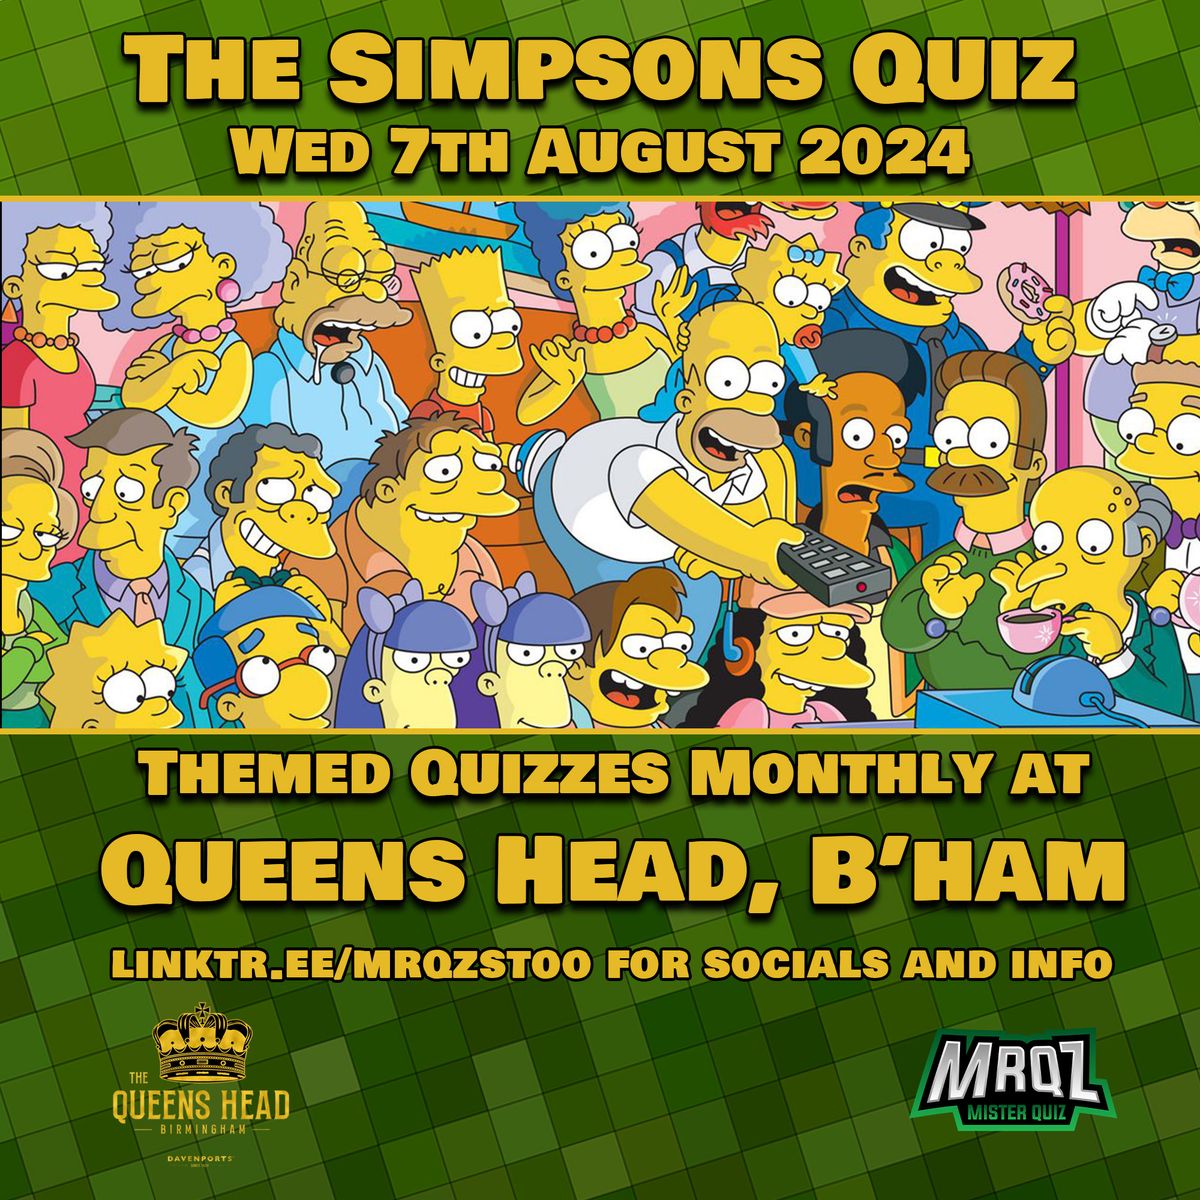 The Simpsons Quiz @ The Queens Head